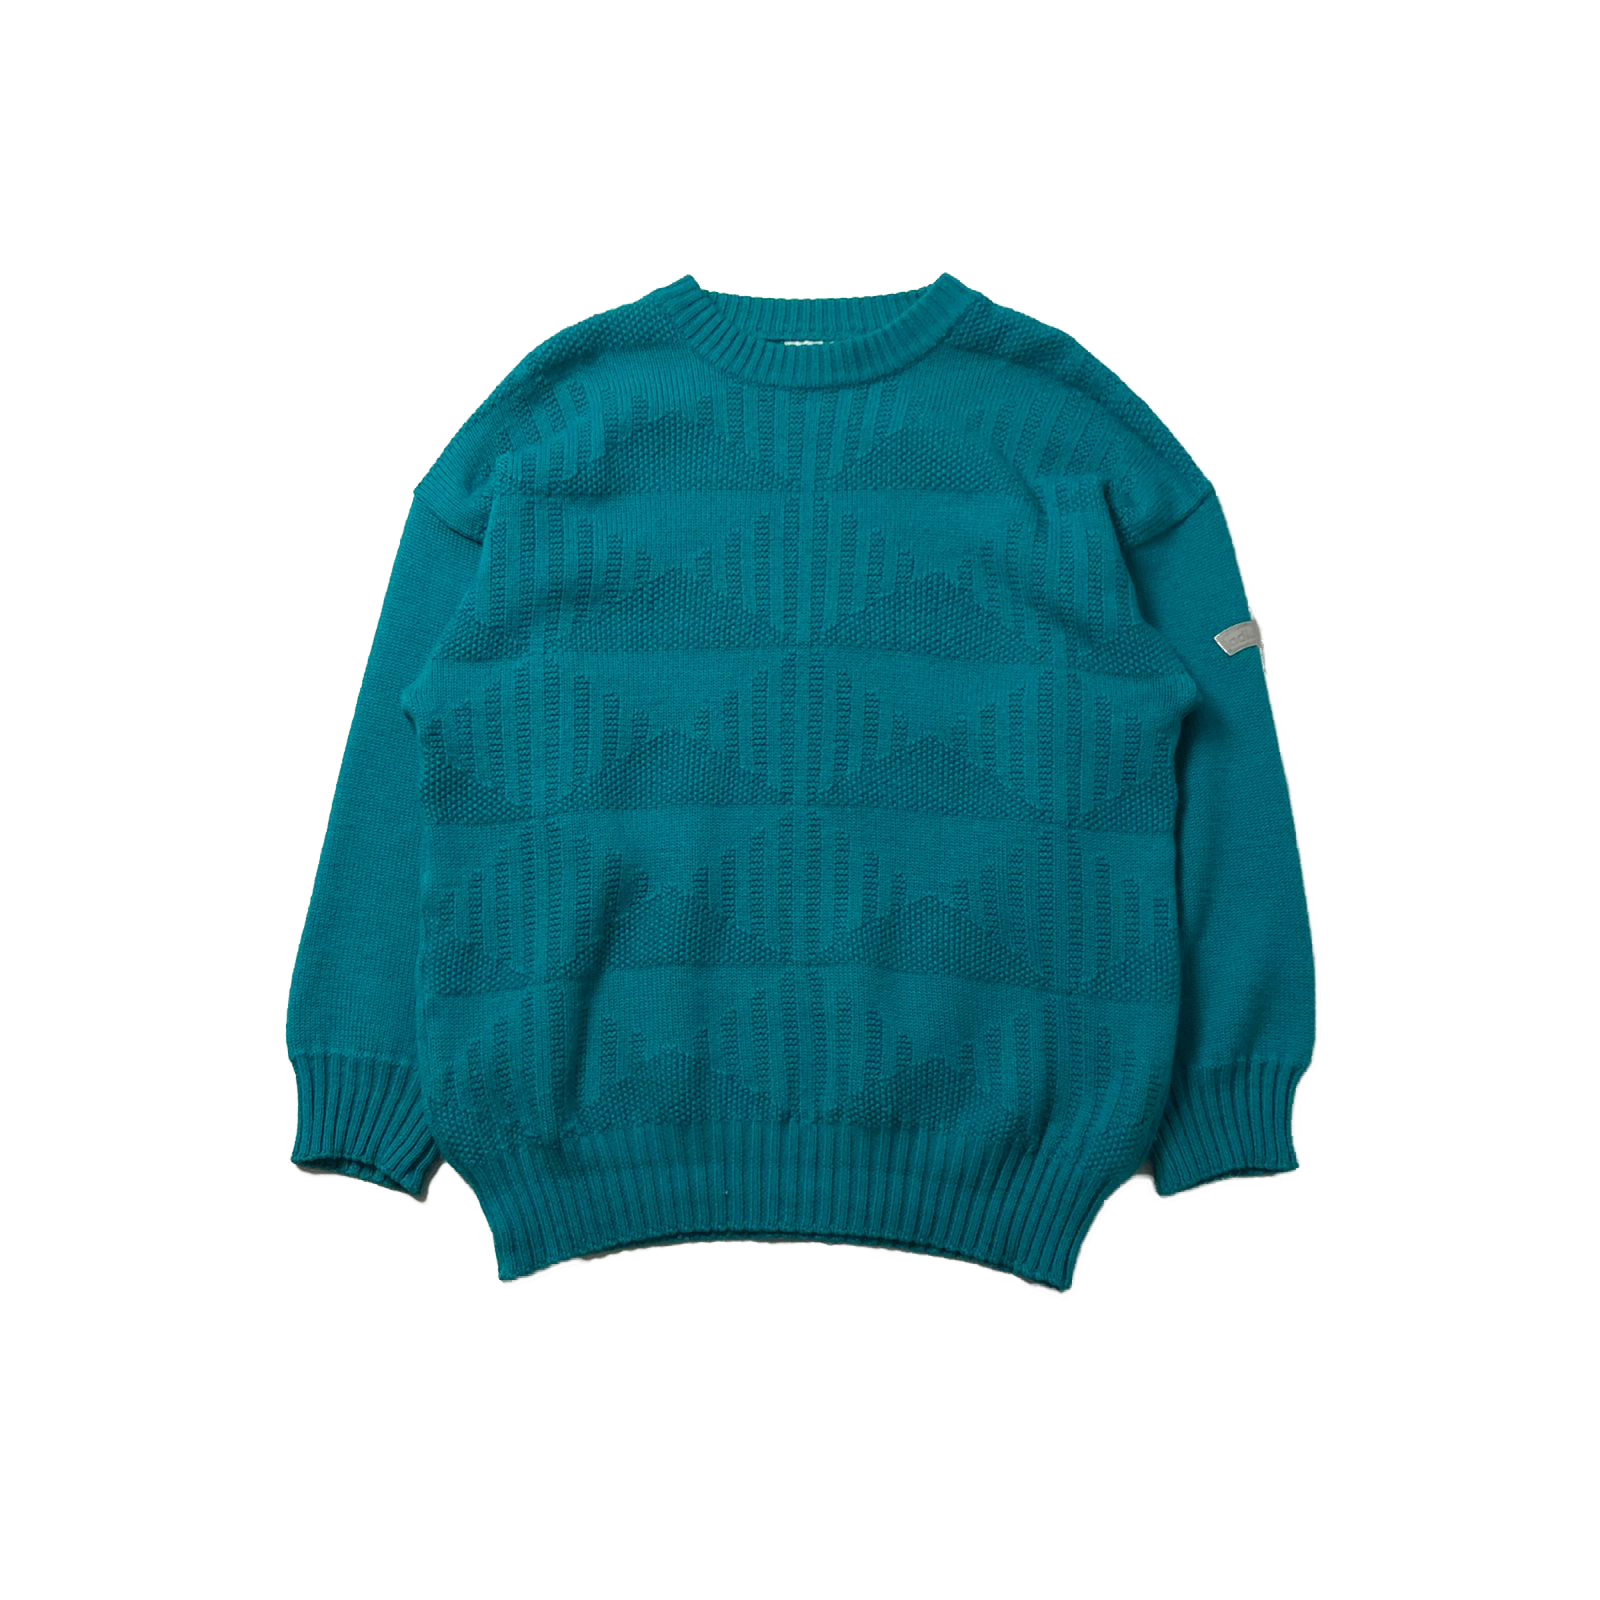 90's Adidas knit sweatshirt